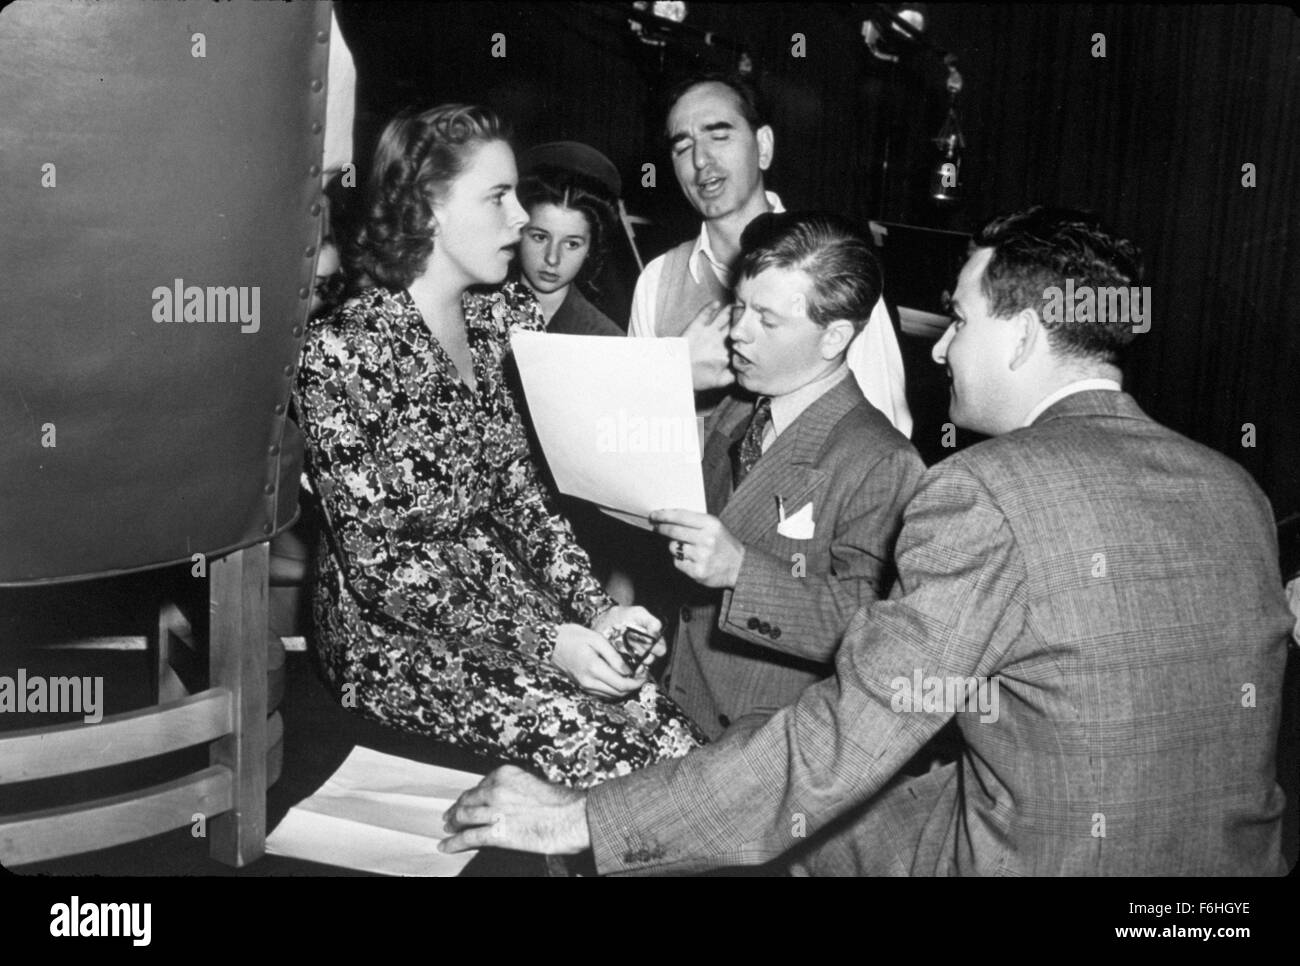 1941, Filmtitel: BABES am BROADWAY, Regisseur: BUSBY BERKELEY, Studio: MGM, abgebildet: BUSBY BERKELEY, ROGER EDENS, ENSEMBLE, JUDY GARLAND, Proben, MICKEY ROONEY. (Bild Kredit: SNAP) Stockfoto